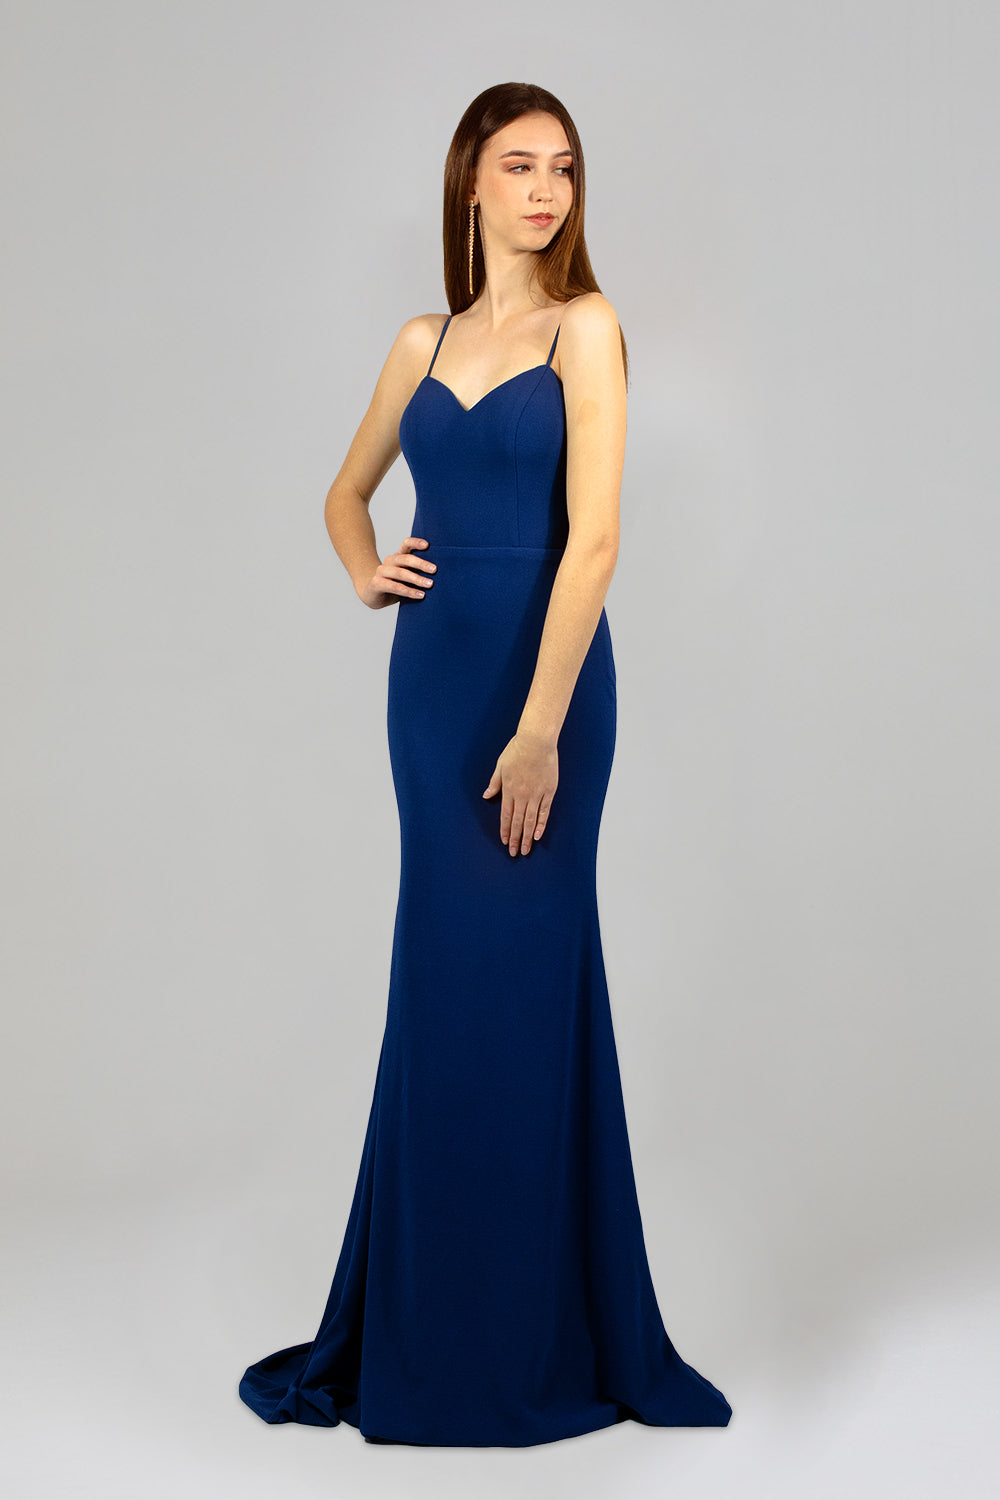 custom made blue fitted ball dresses online australia envious bridal & formal